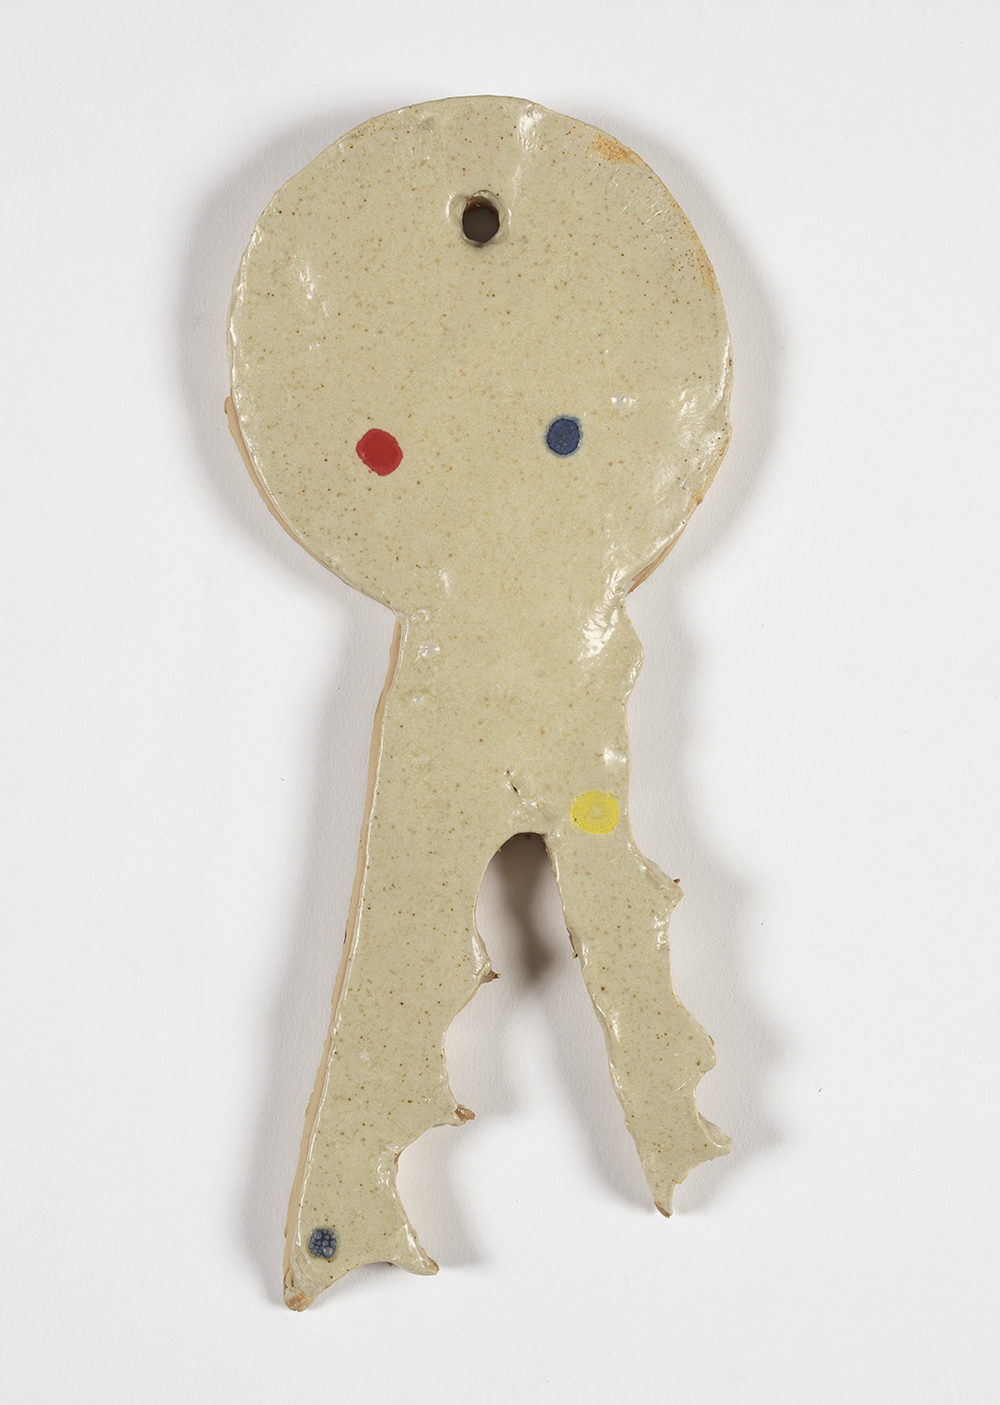 Kevin McNamee-Tweed.<em> Key (Hunches)</em>, 2019. Glazed ceramic, 9 x 4 inches (22.9 x 10.2 cm)